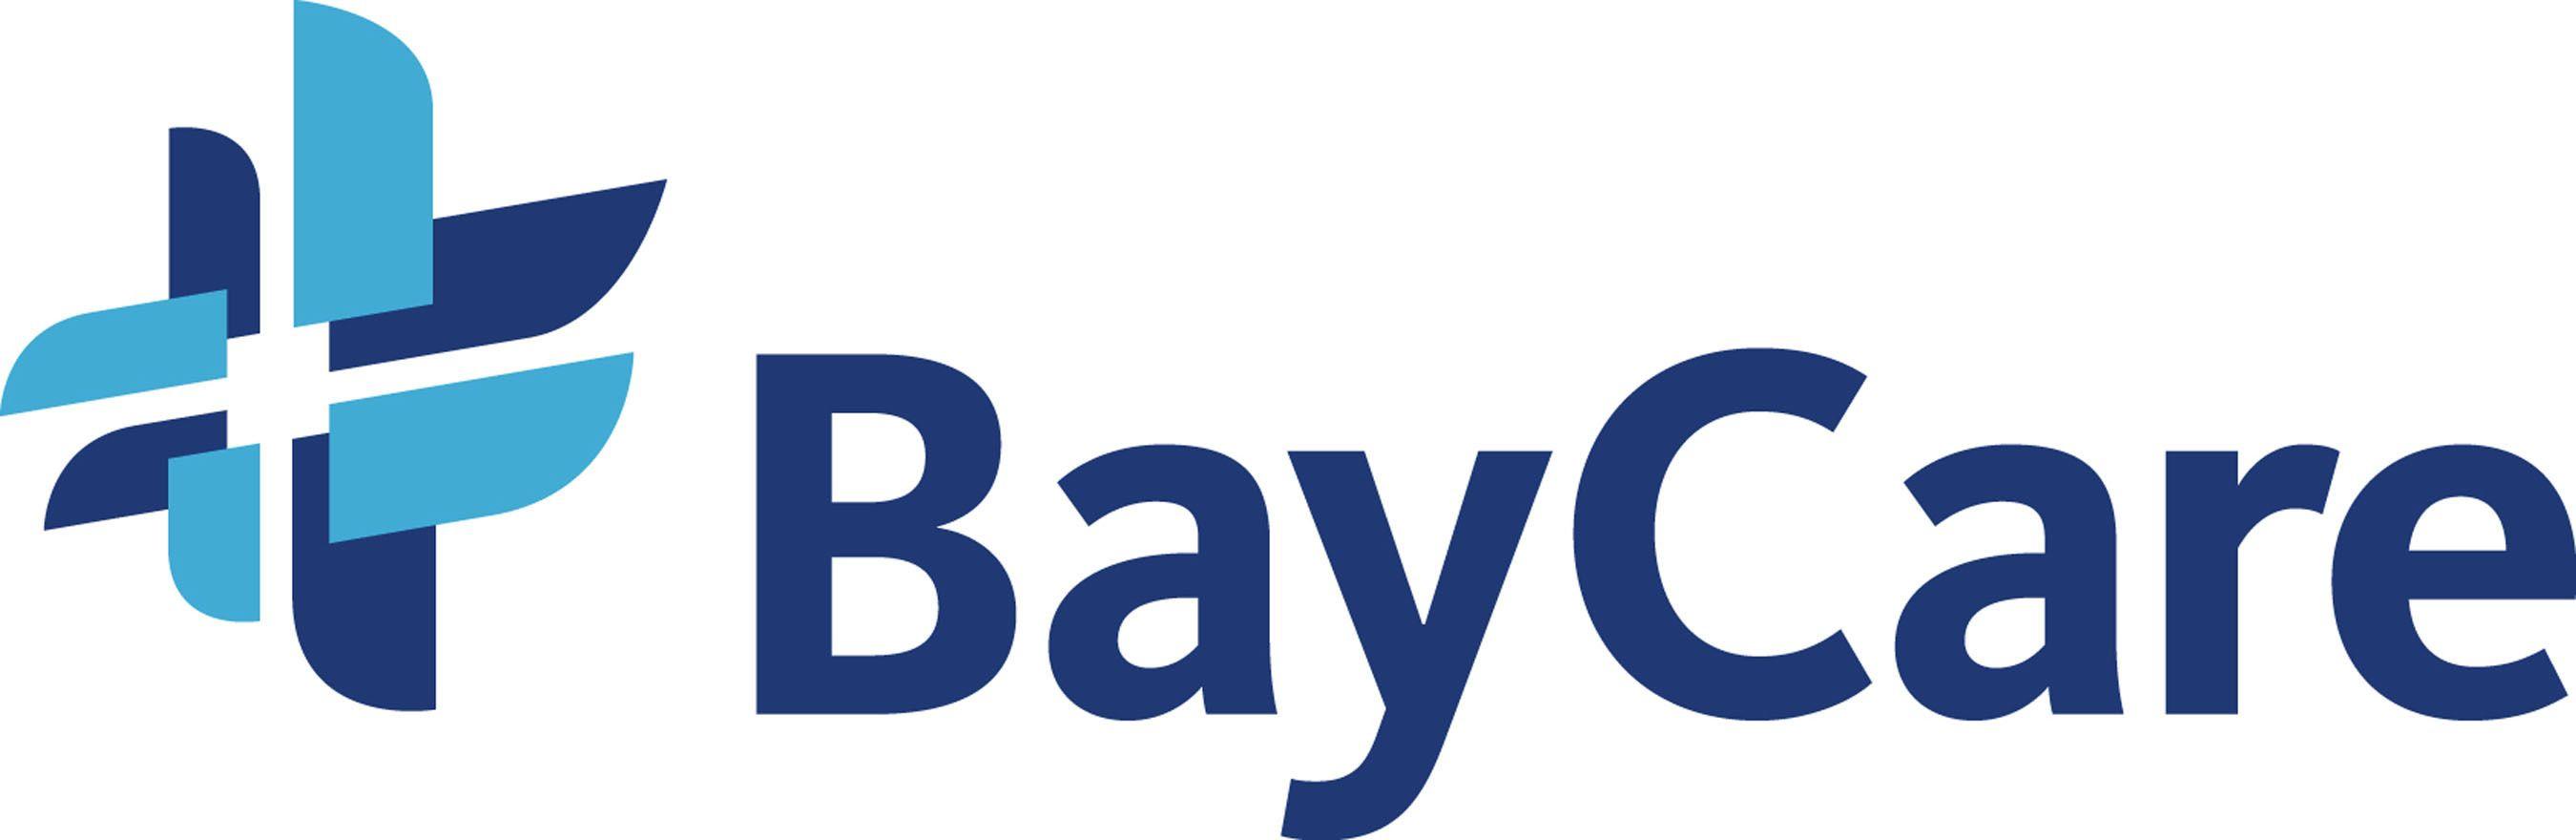 BayCare Logo - BayCare Named One of 